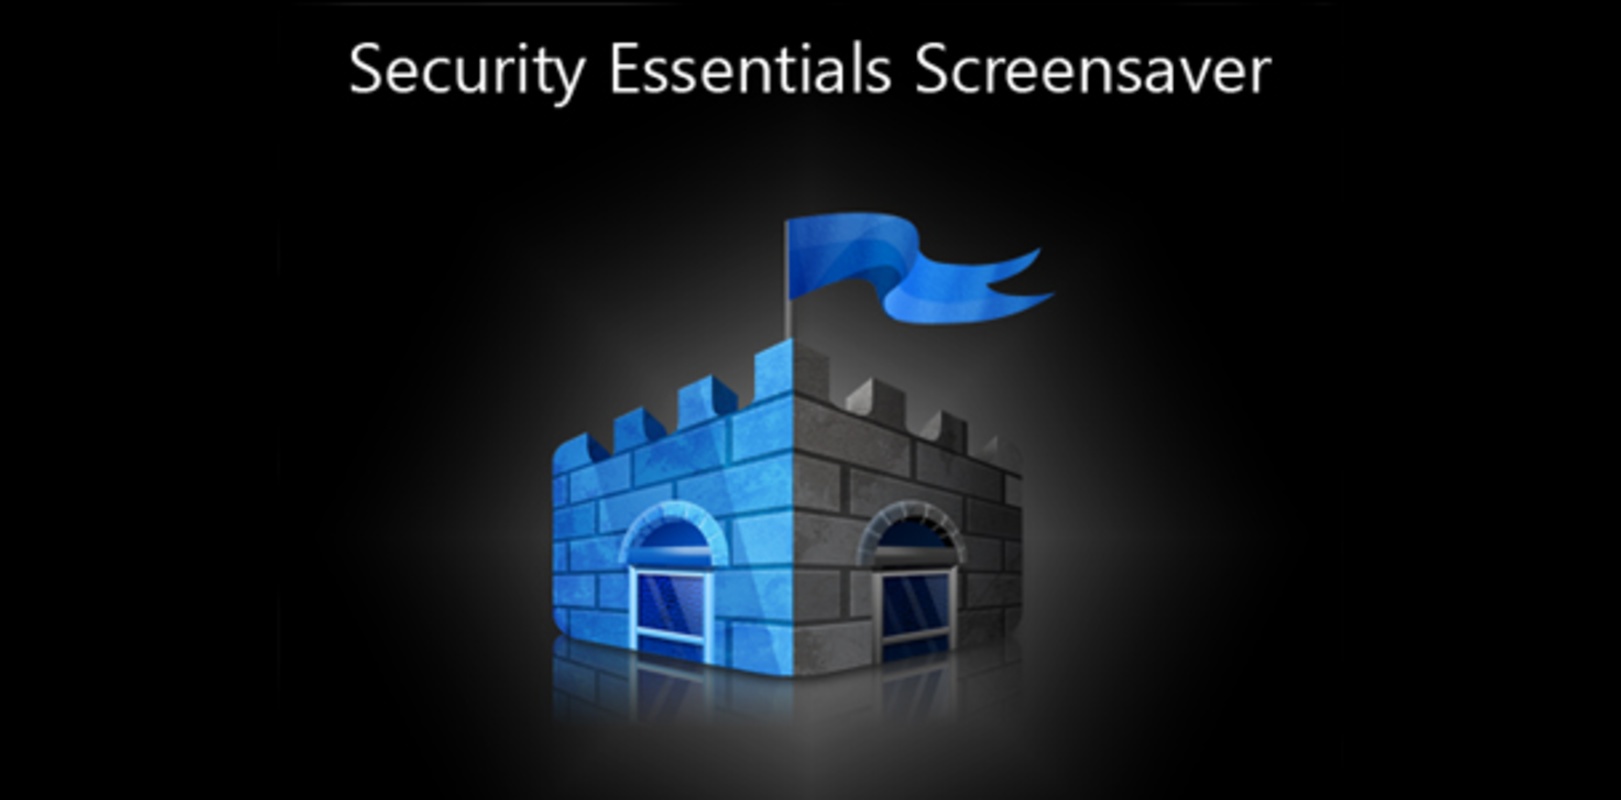 Security Essentials Screensaver 2.0 feature